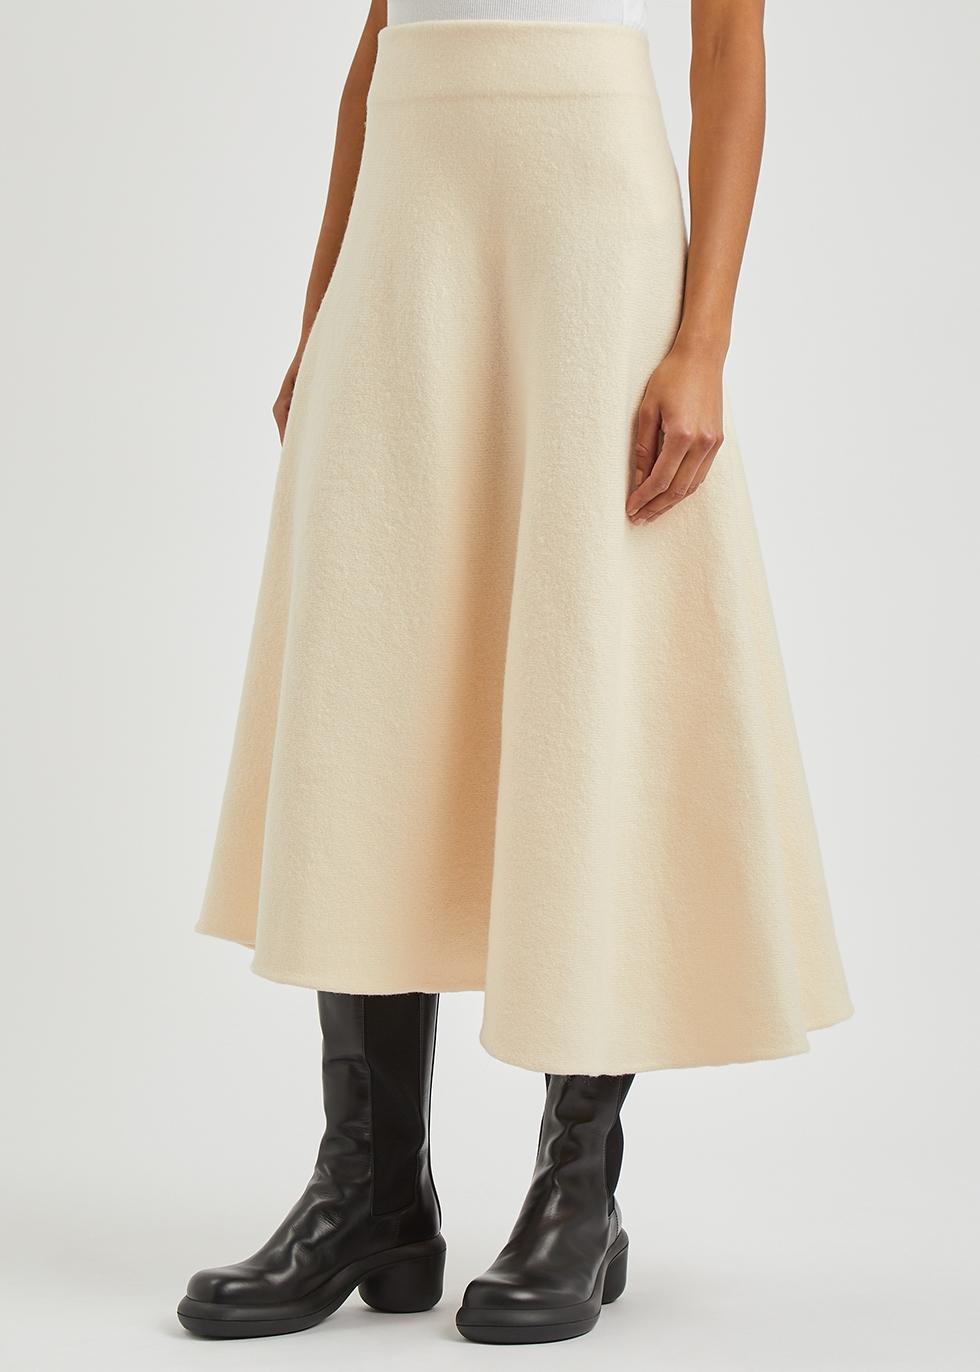 Jil Sander Cream Wool Midi Skirt in Natural | Lyst